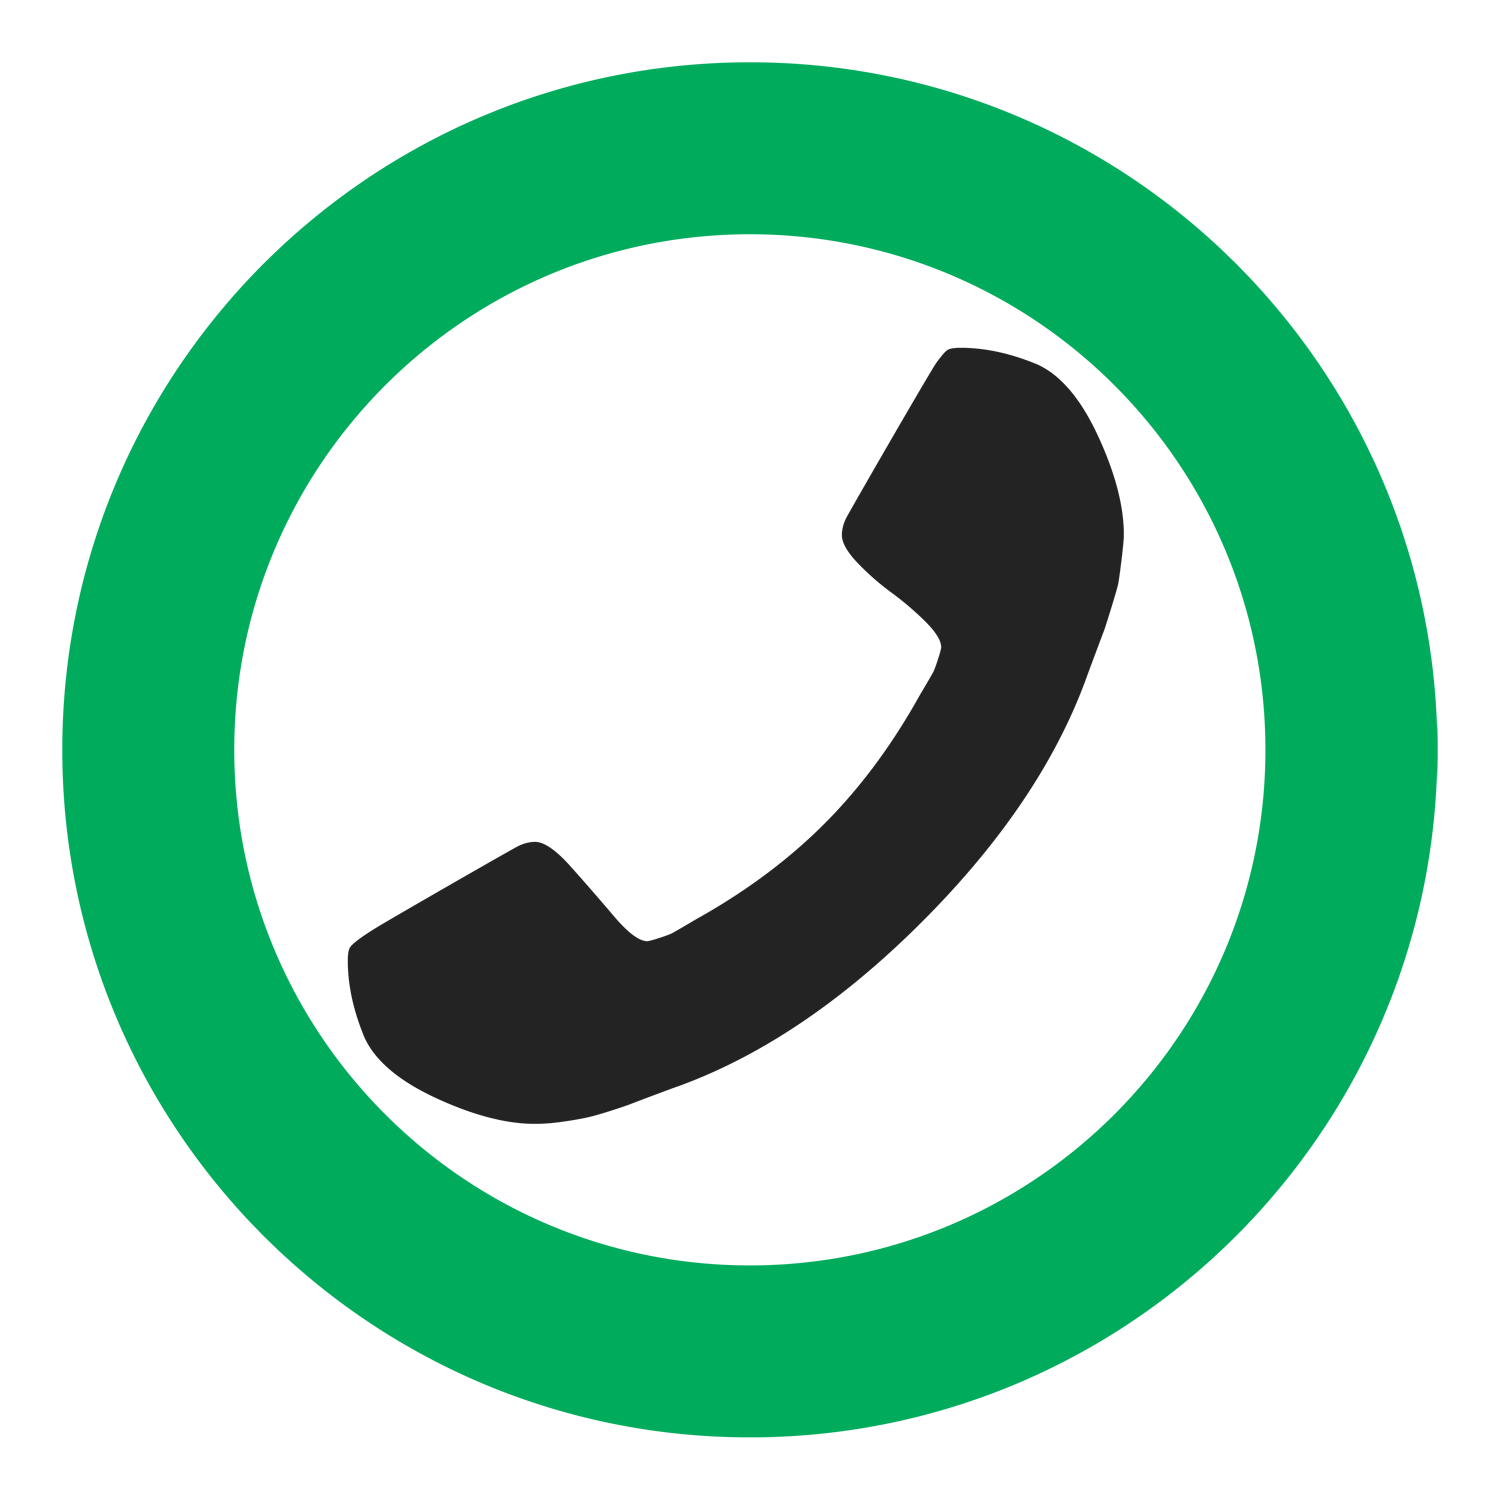 green mobile icon